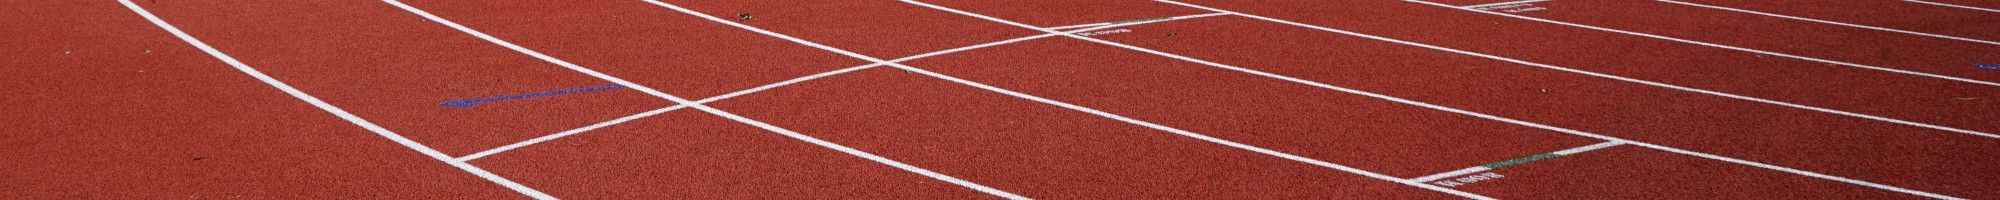 Ross Reserve Athletics Track